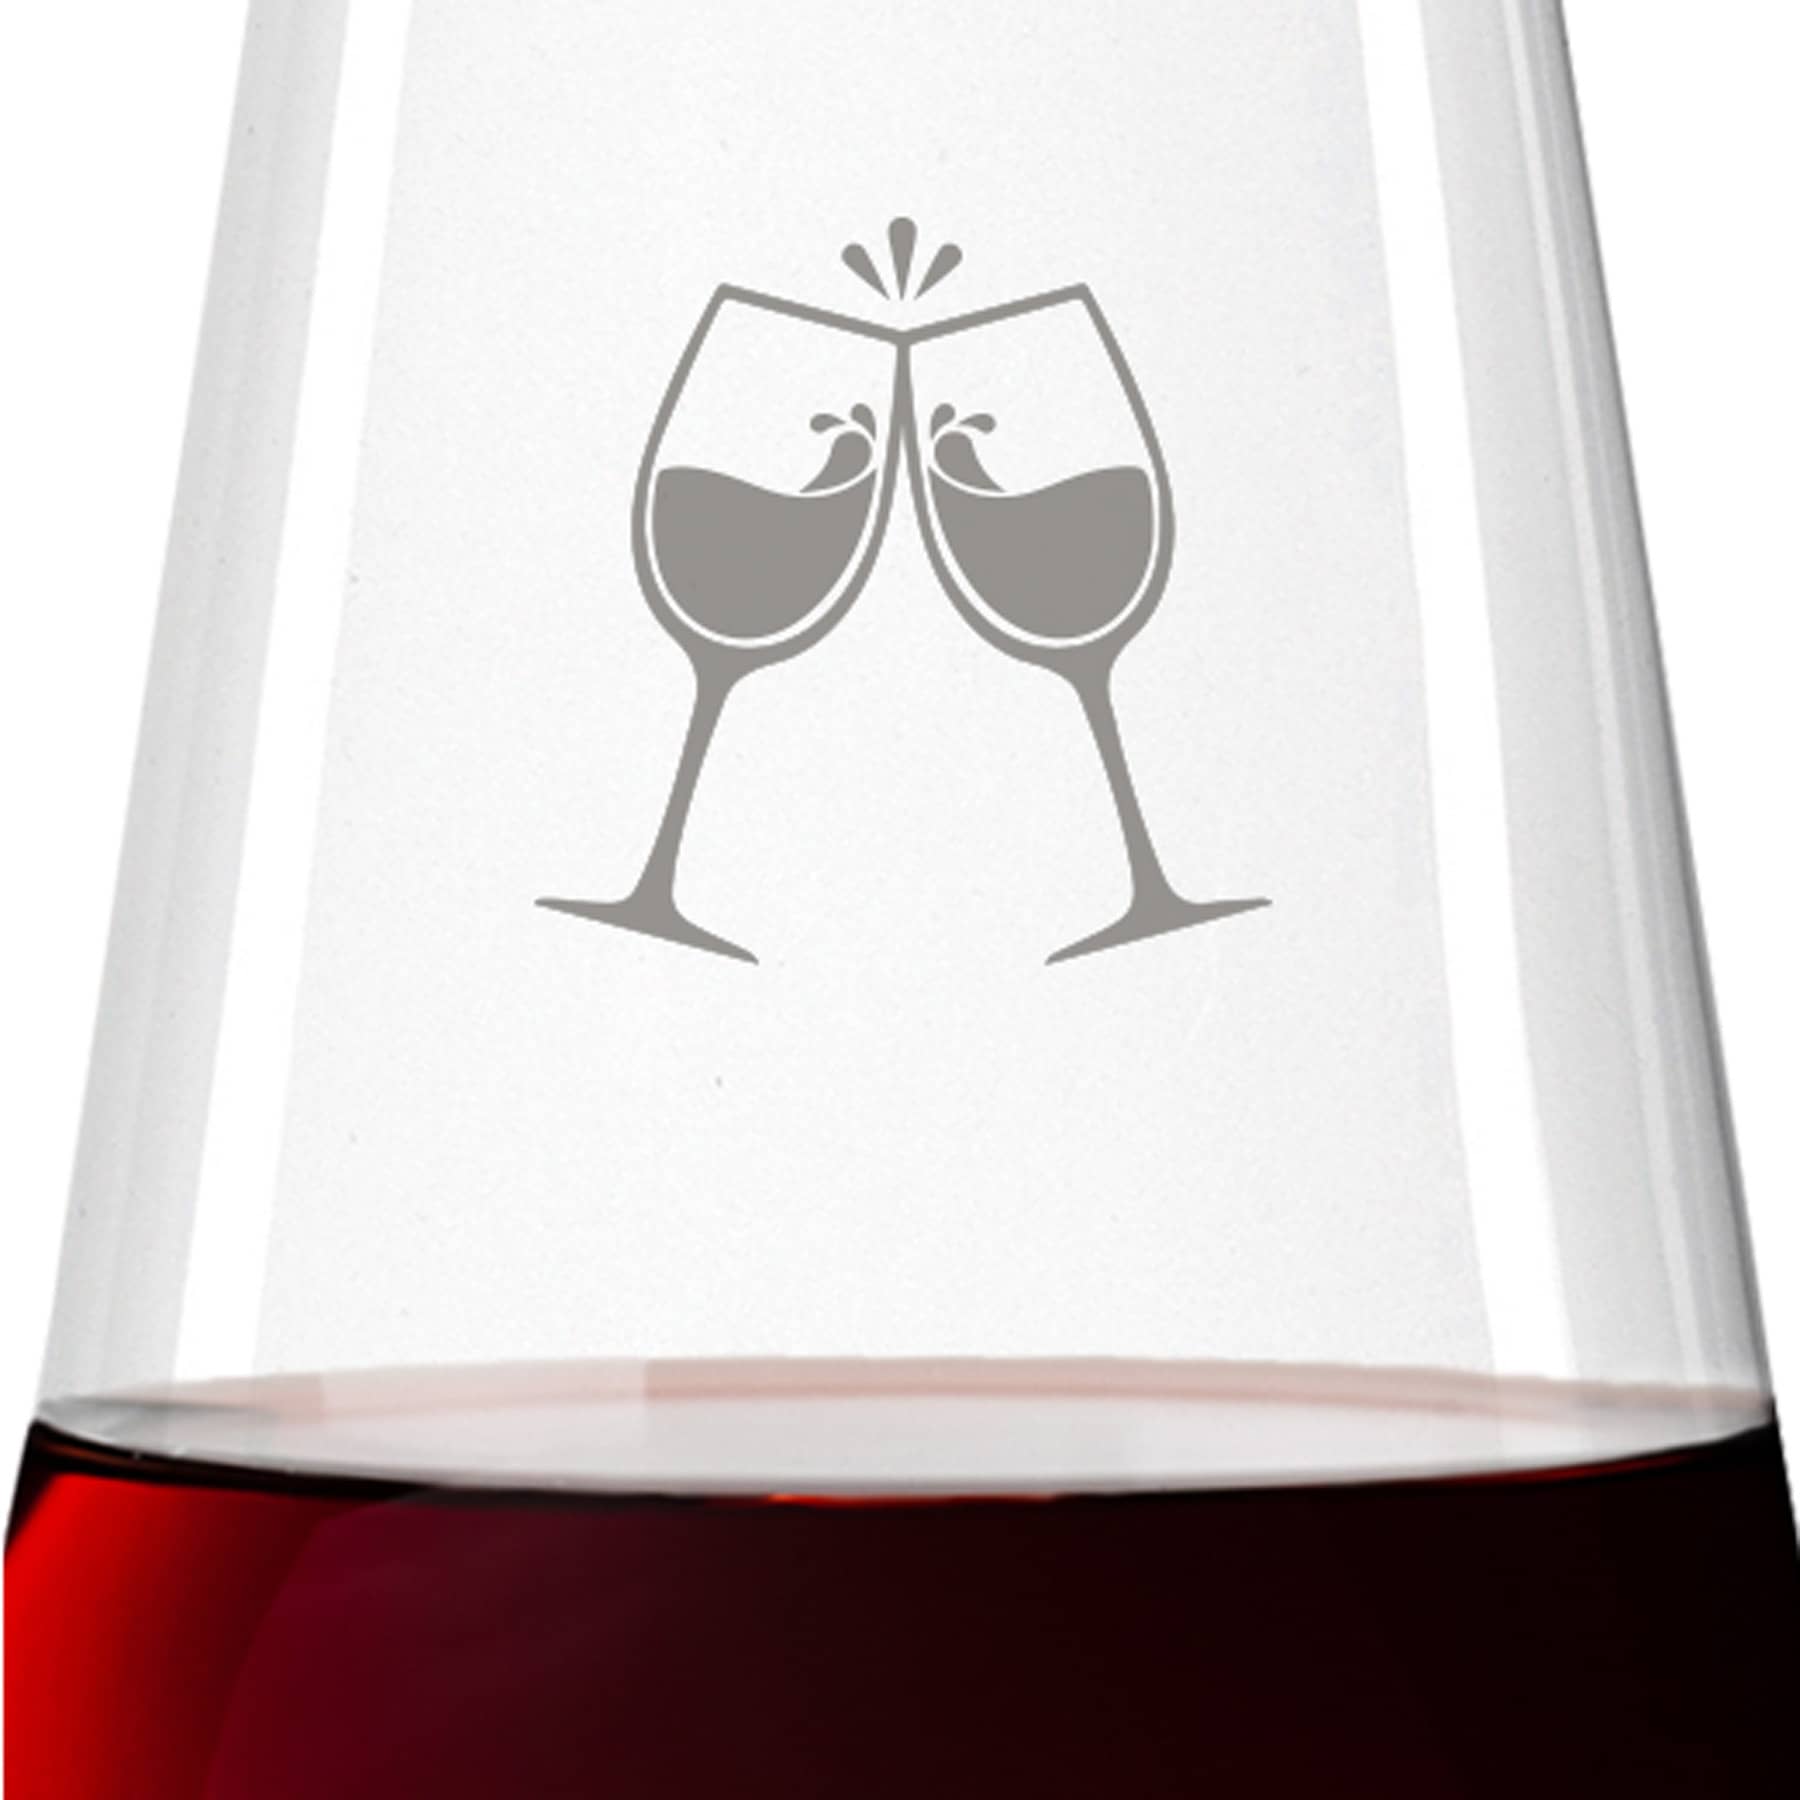 Leonardo Rotweinglas PUCCINI 750ml mit Namen oder Wunschtext graviert (ChinChin)